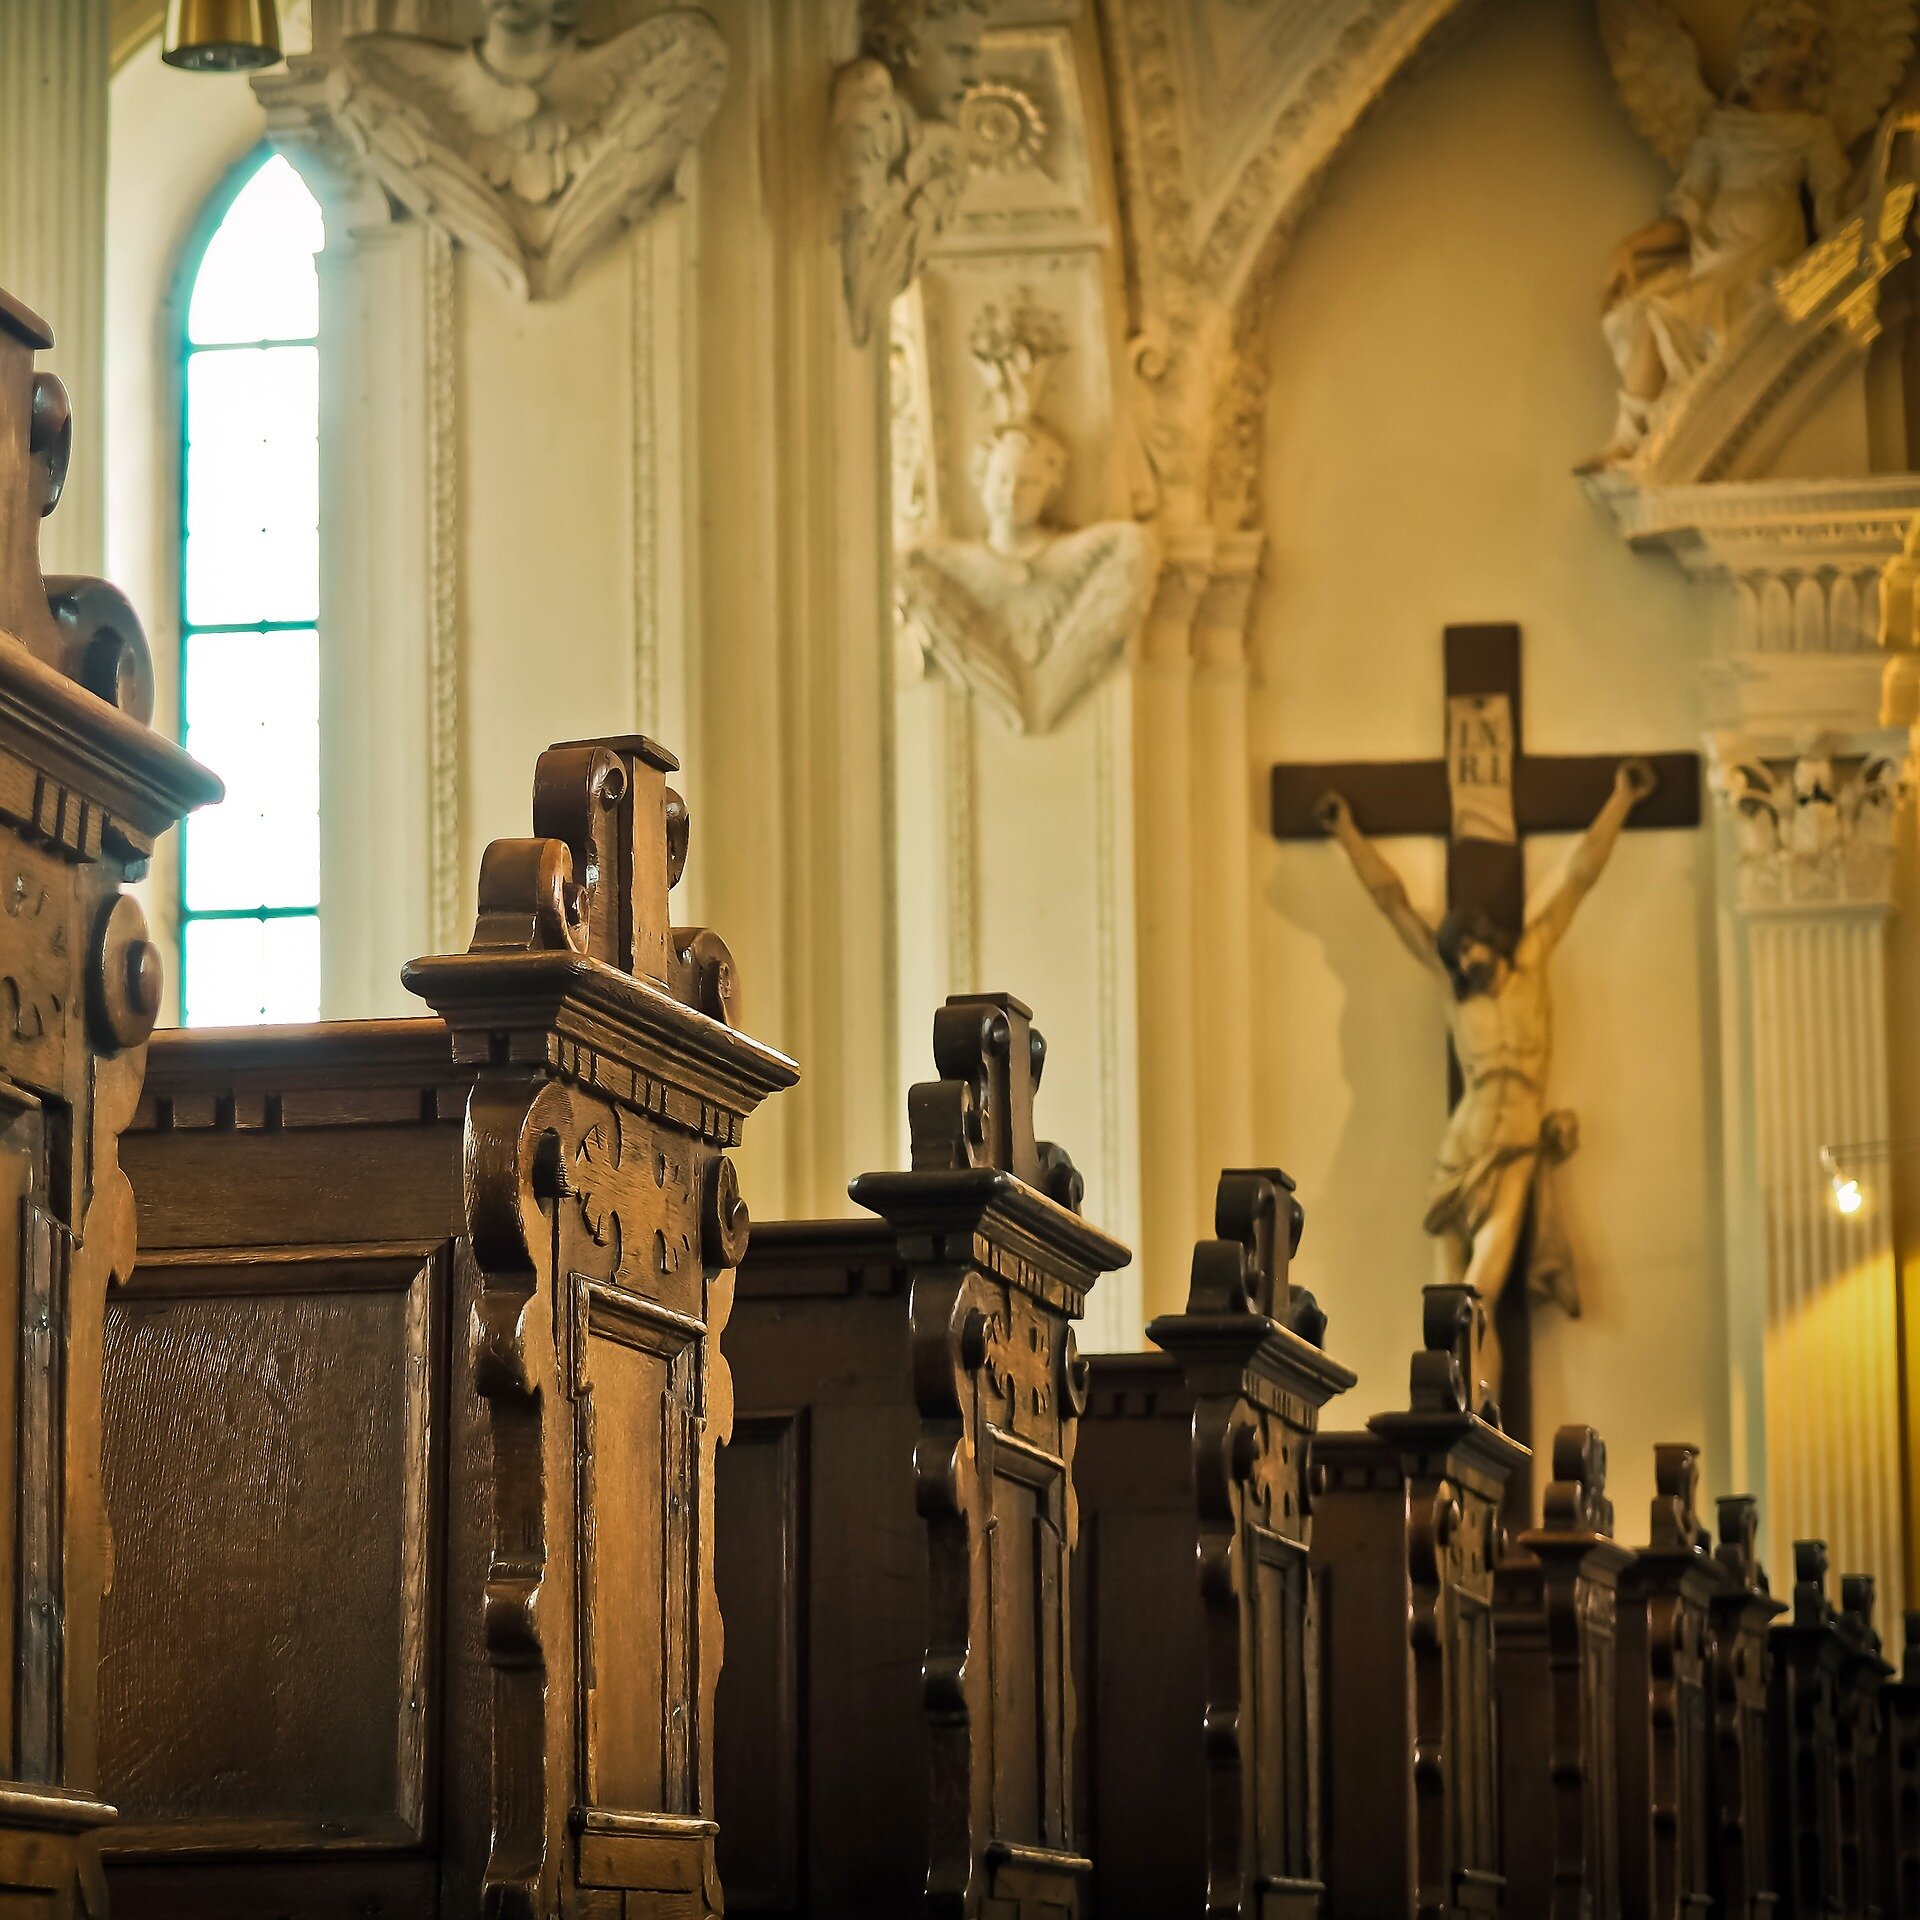 Crucifix and Pews in Catholic Church